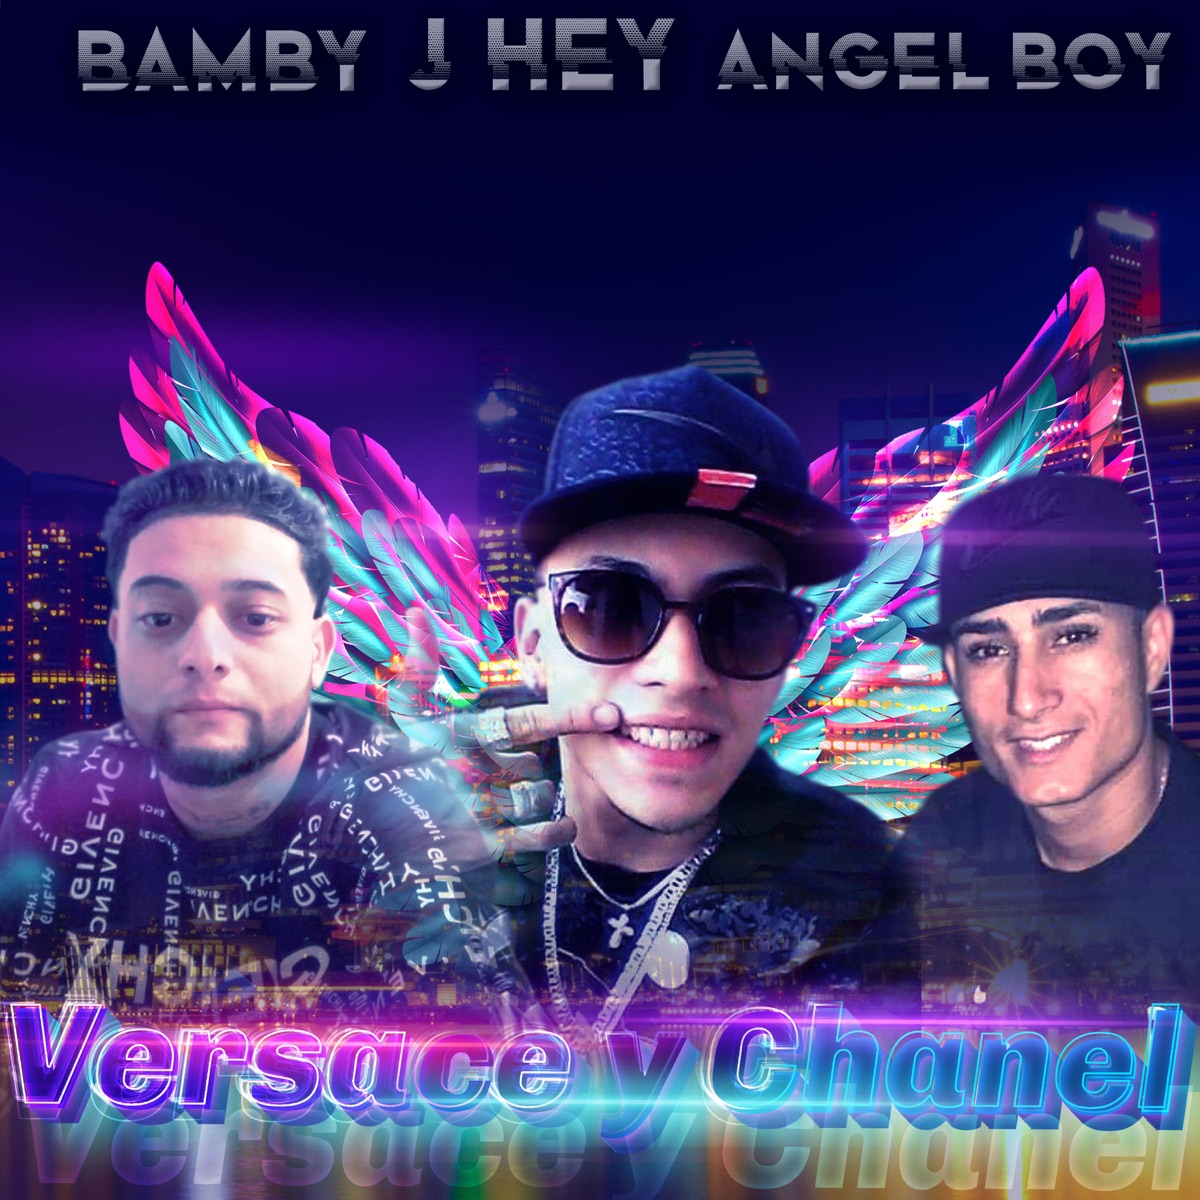 VERSACE Y CHANEL (feat. Ángel boy & J hey) - Single by Bamby DTP on Apple  Music